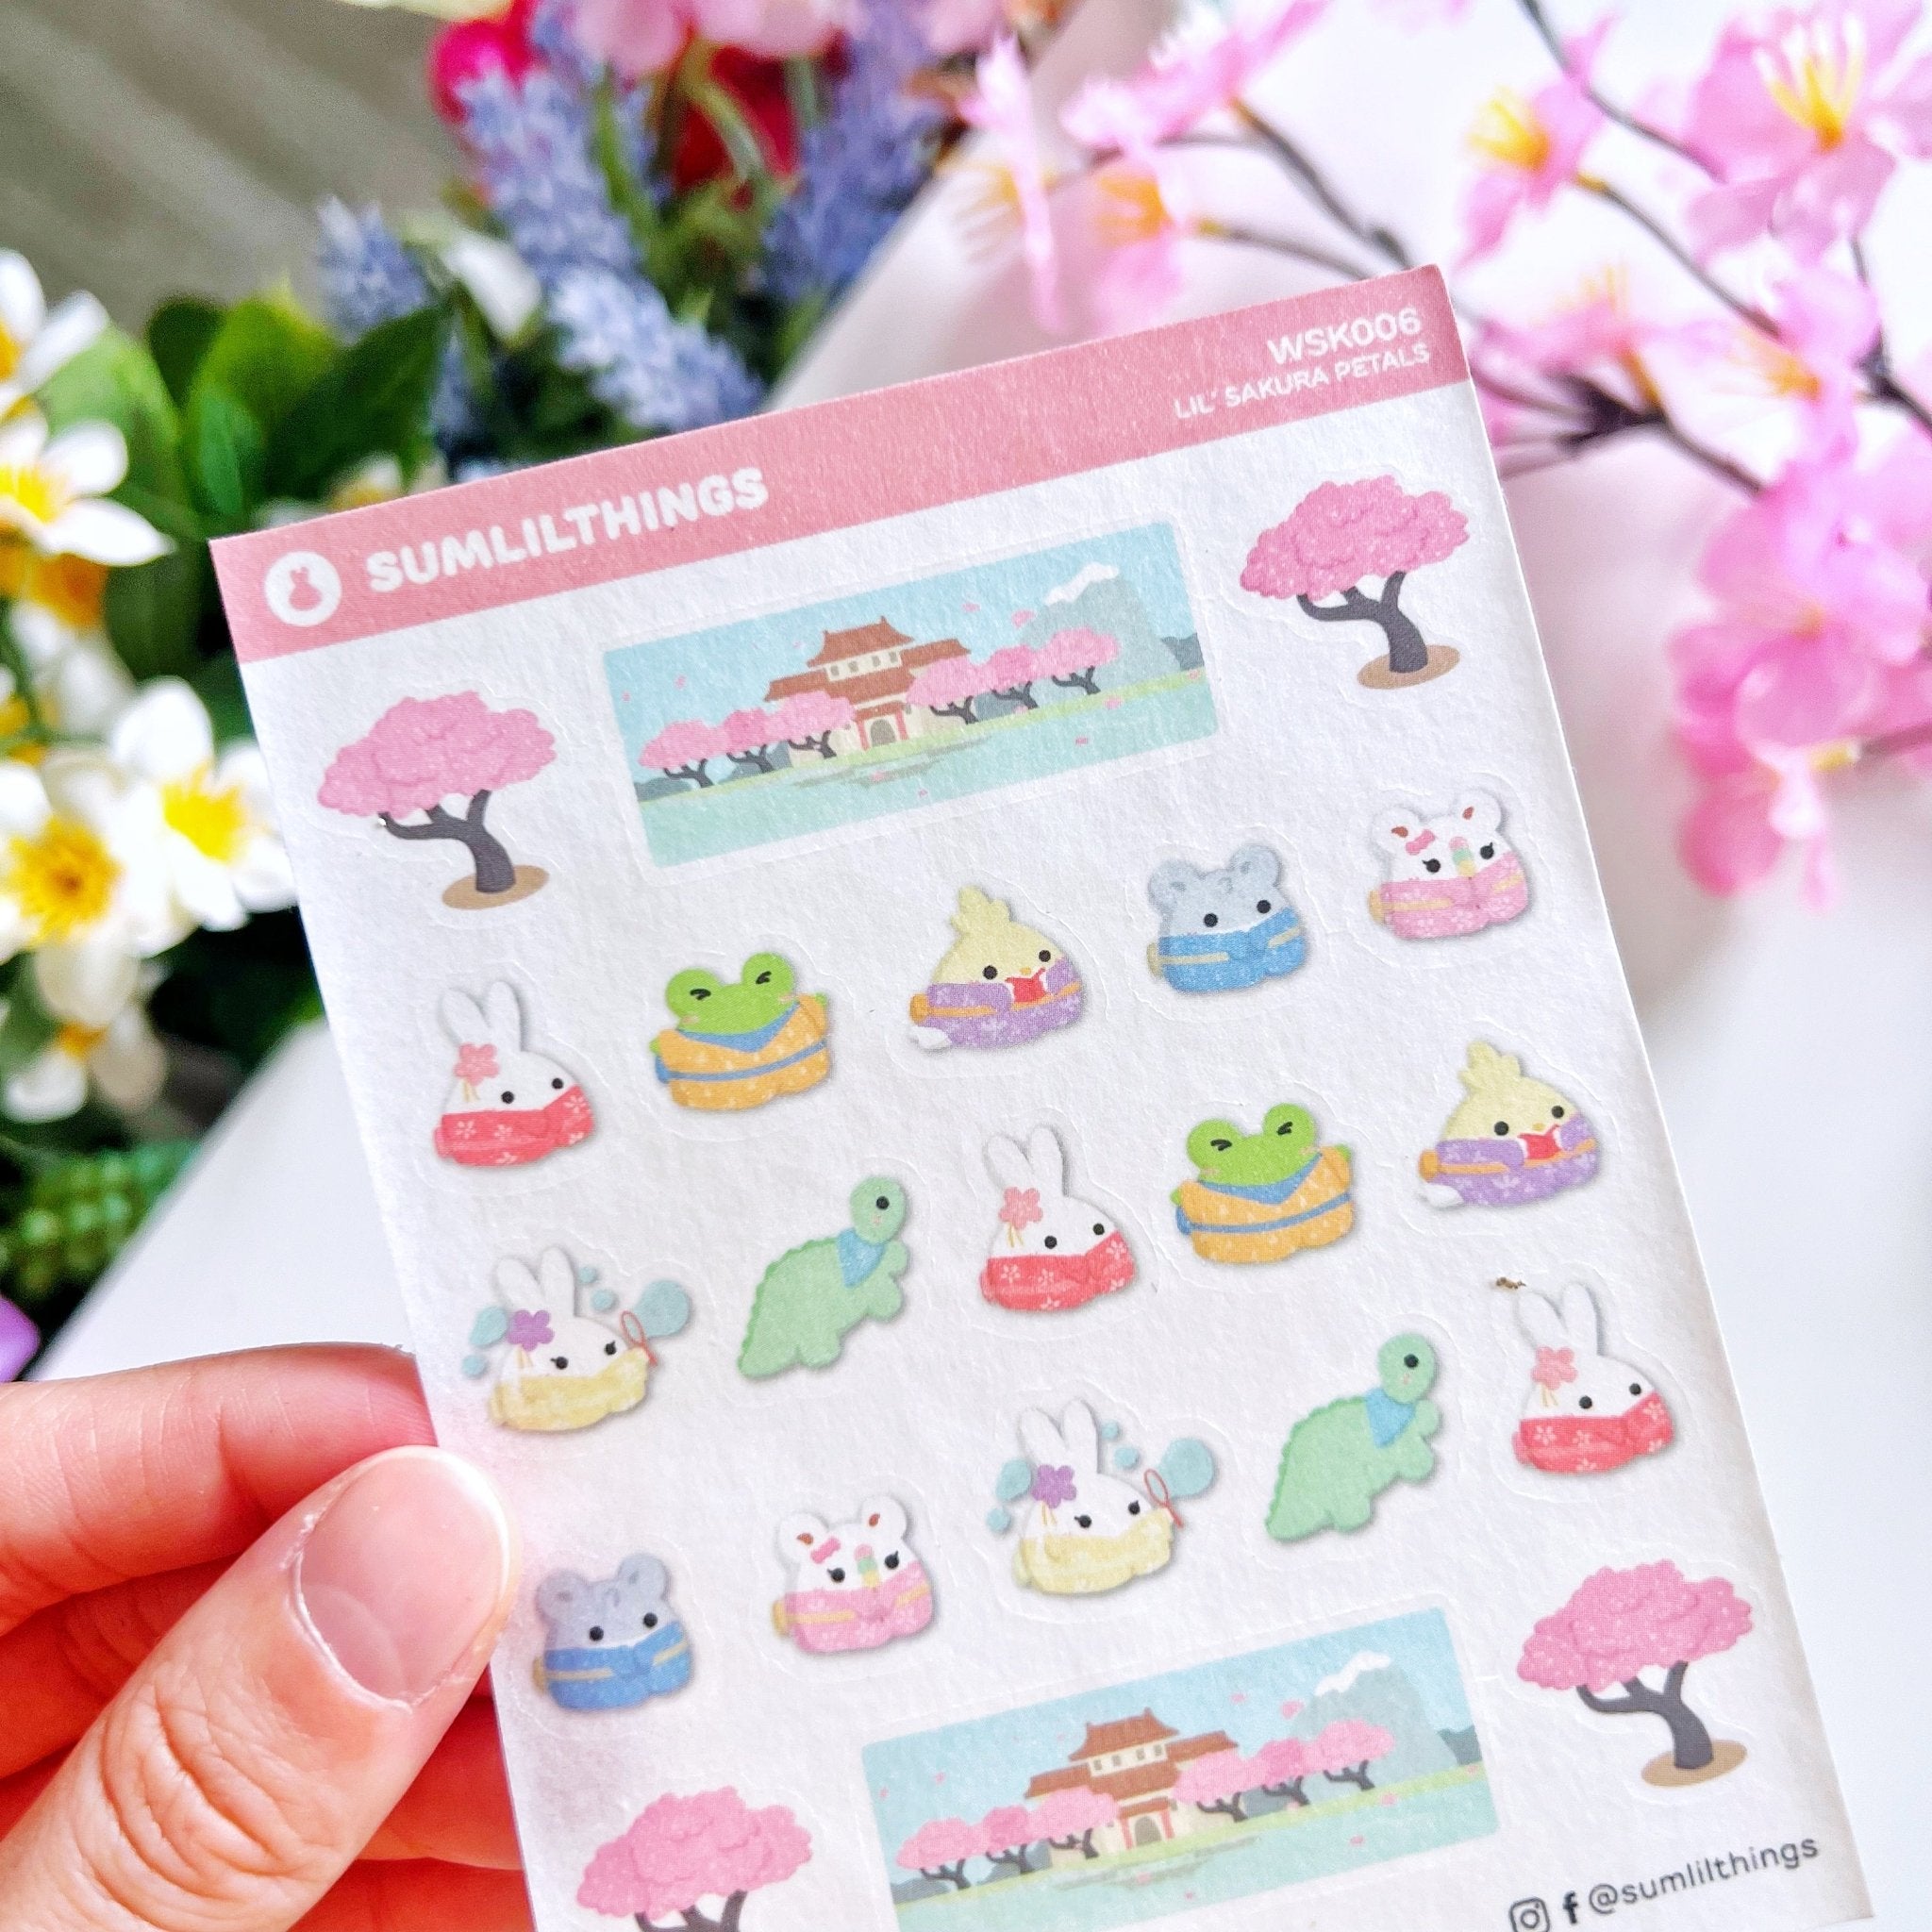 Lil' Sakura Petals Washi Stickers - SumLilThings